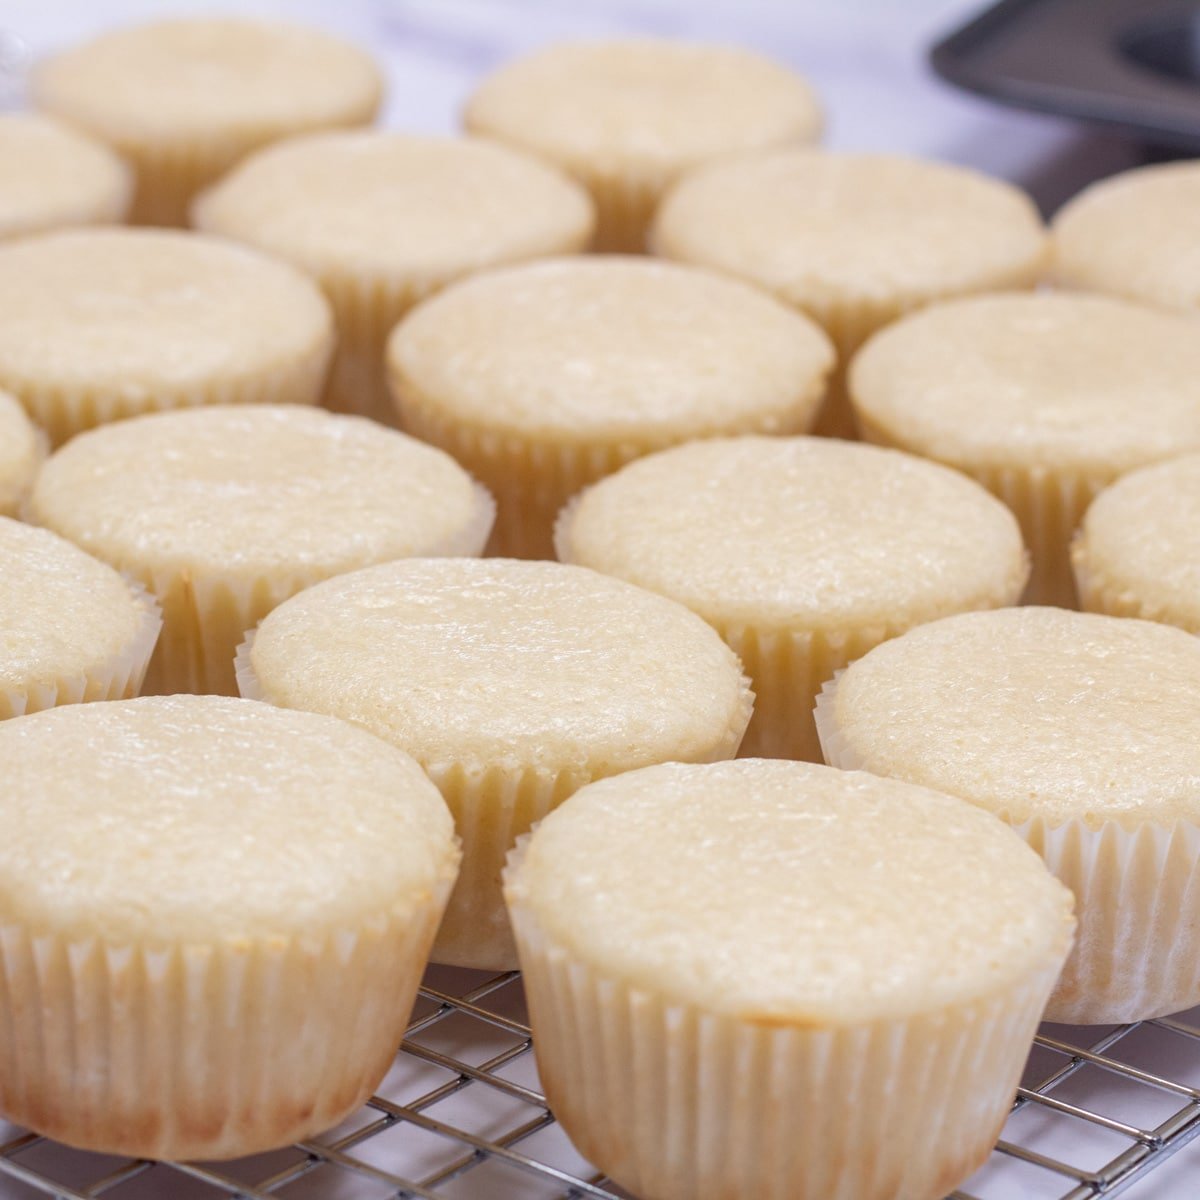 Square image showing vanilla cupcakes.